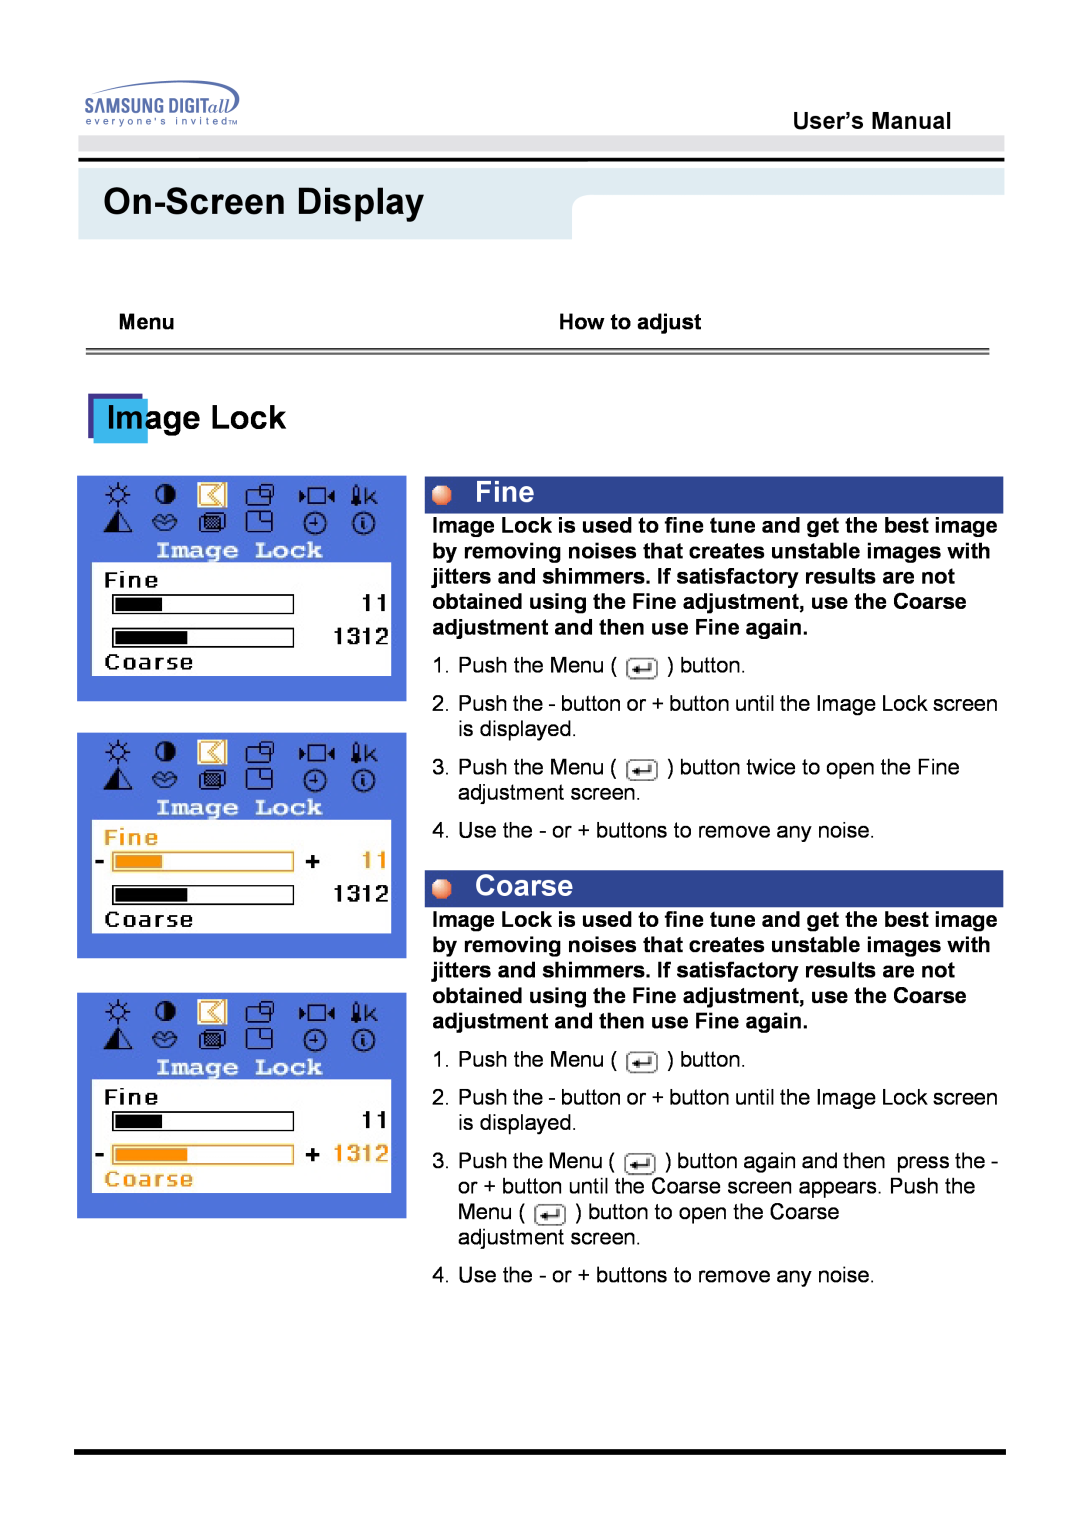 Samsung 760TFT manual On-Screen Display, Image Lock, Fine, Coarse, User’s Manual, Menu, How to adjust 